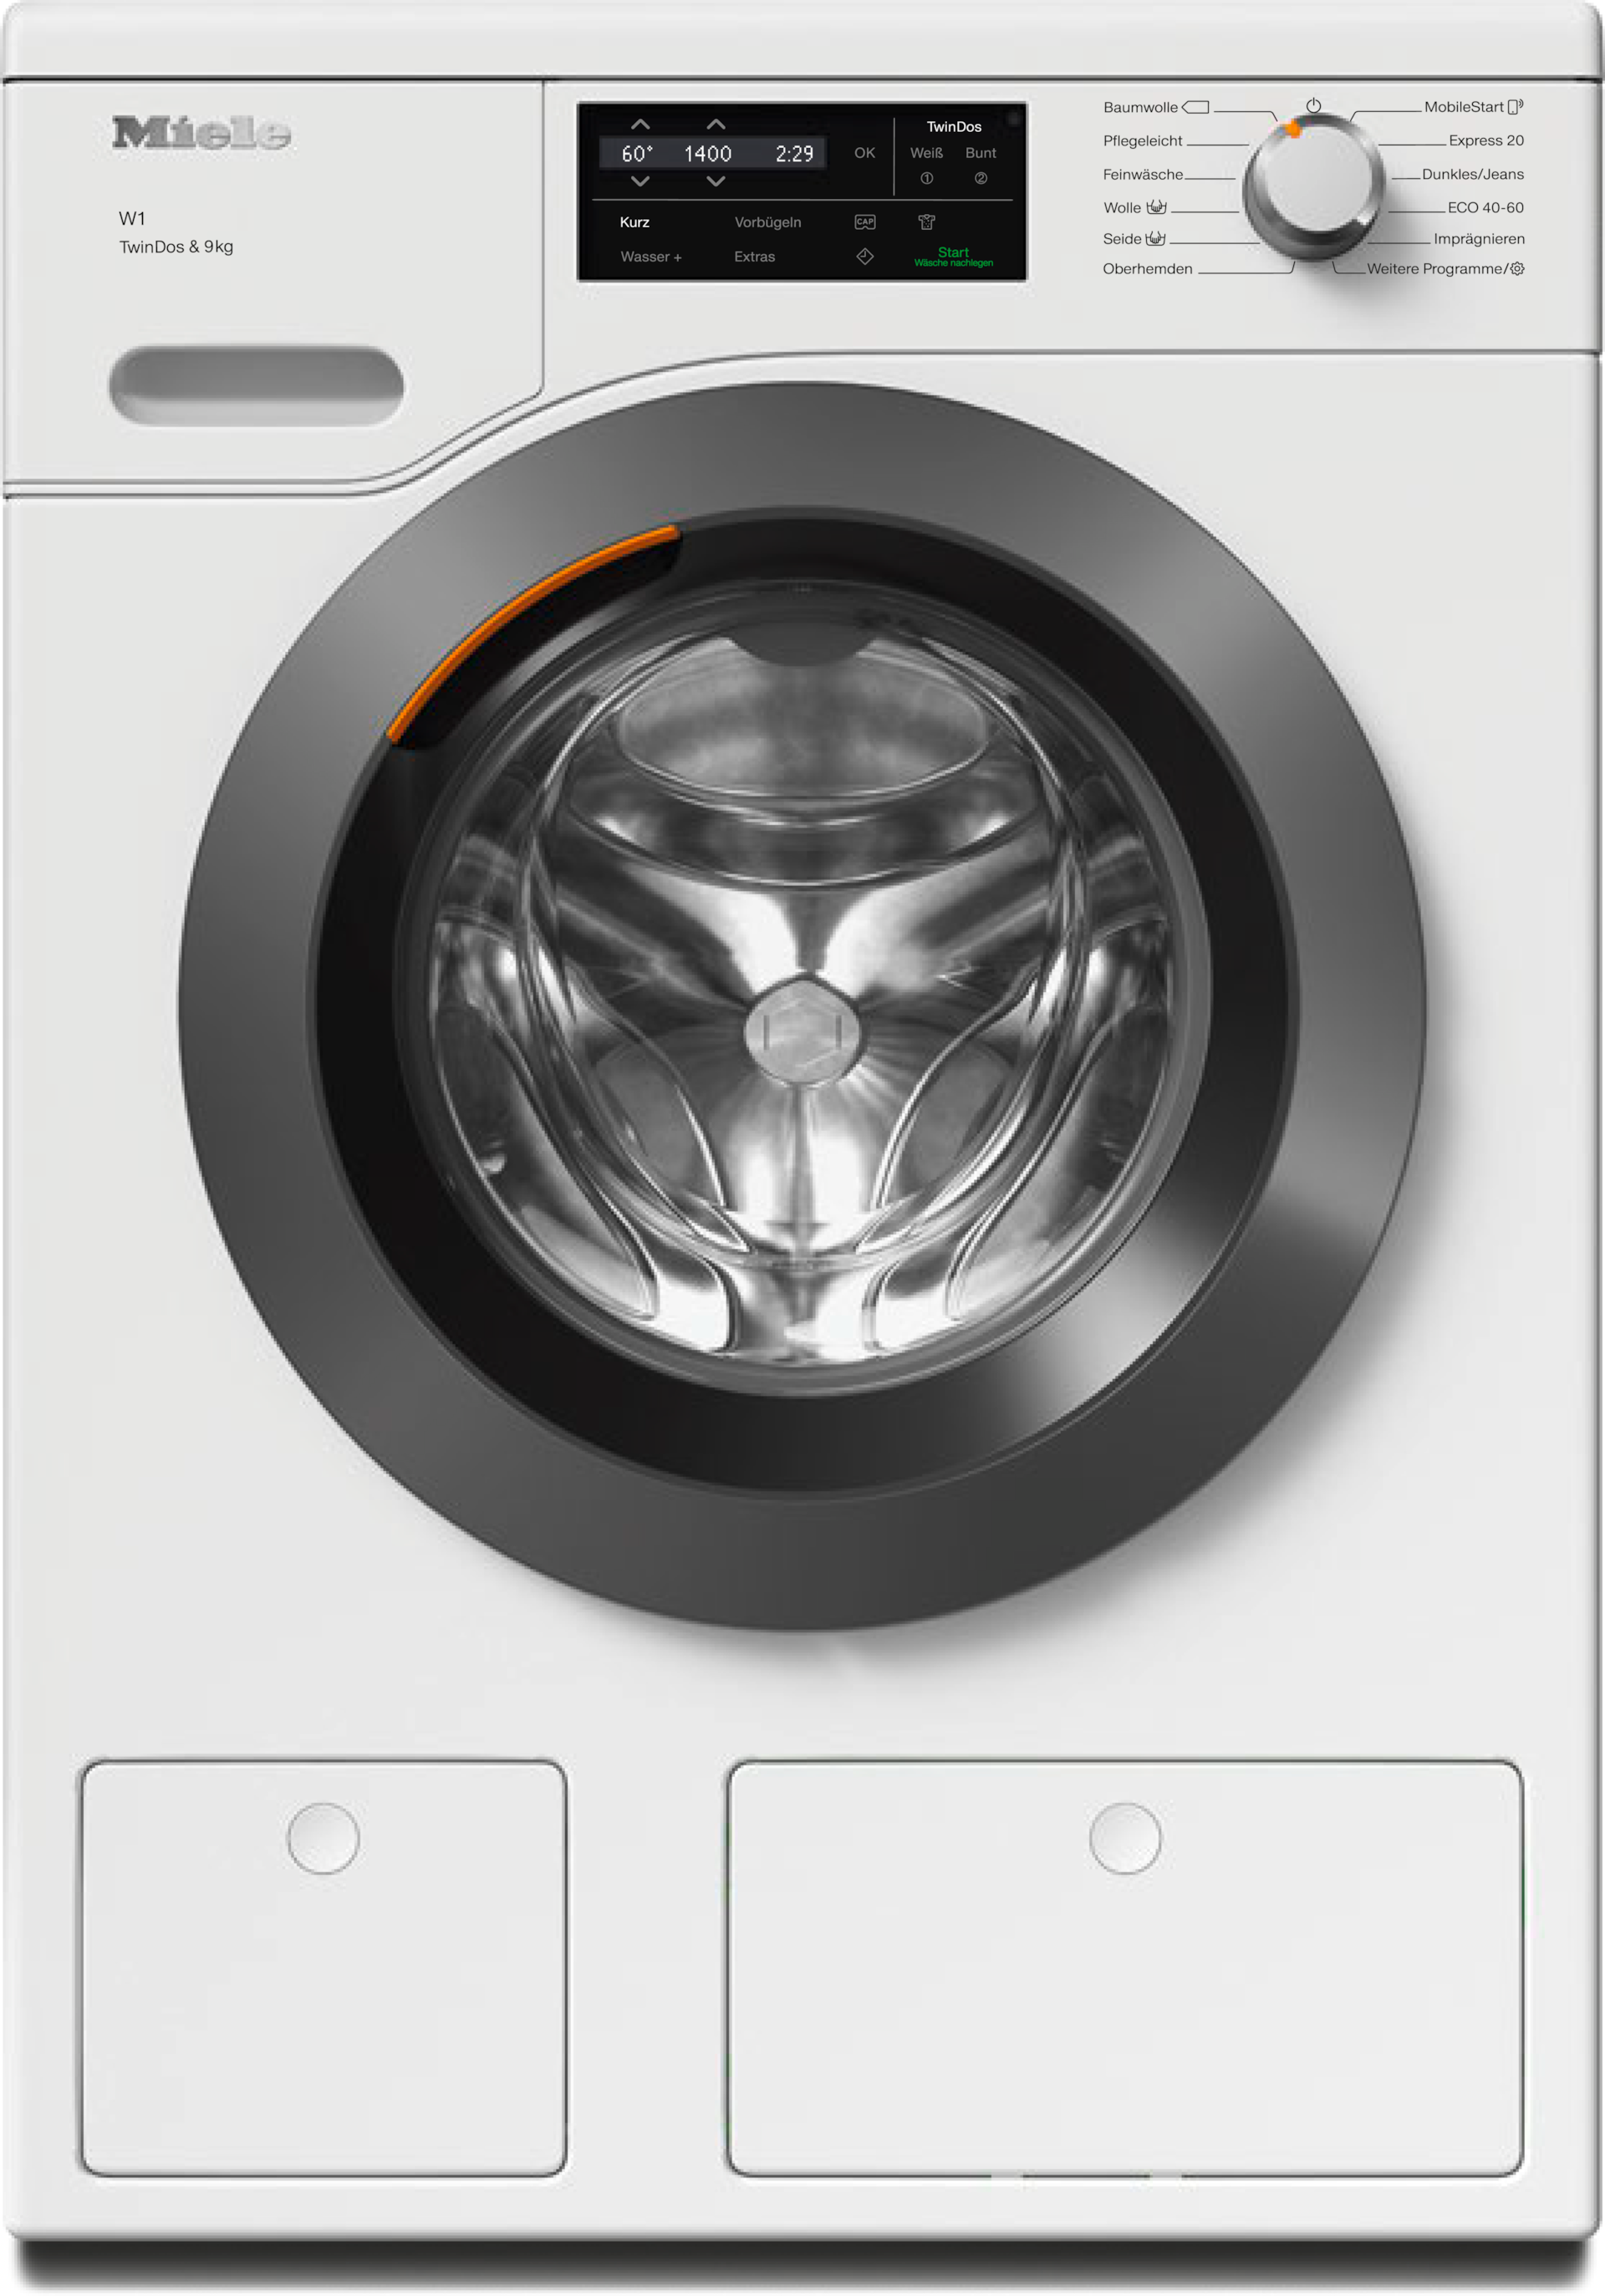 Washing machines - WCG660 WPS TDos&9kg Lopoč bijela - 1